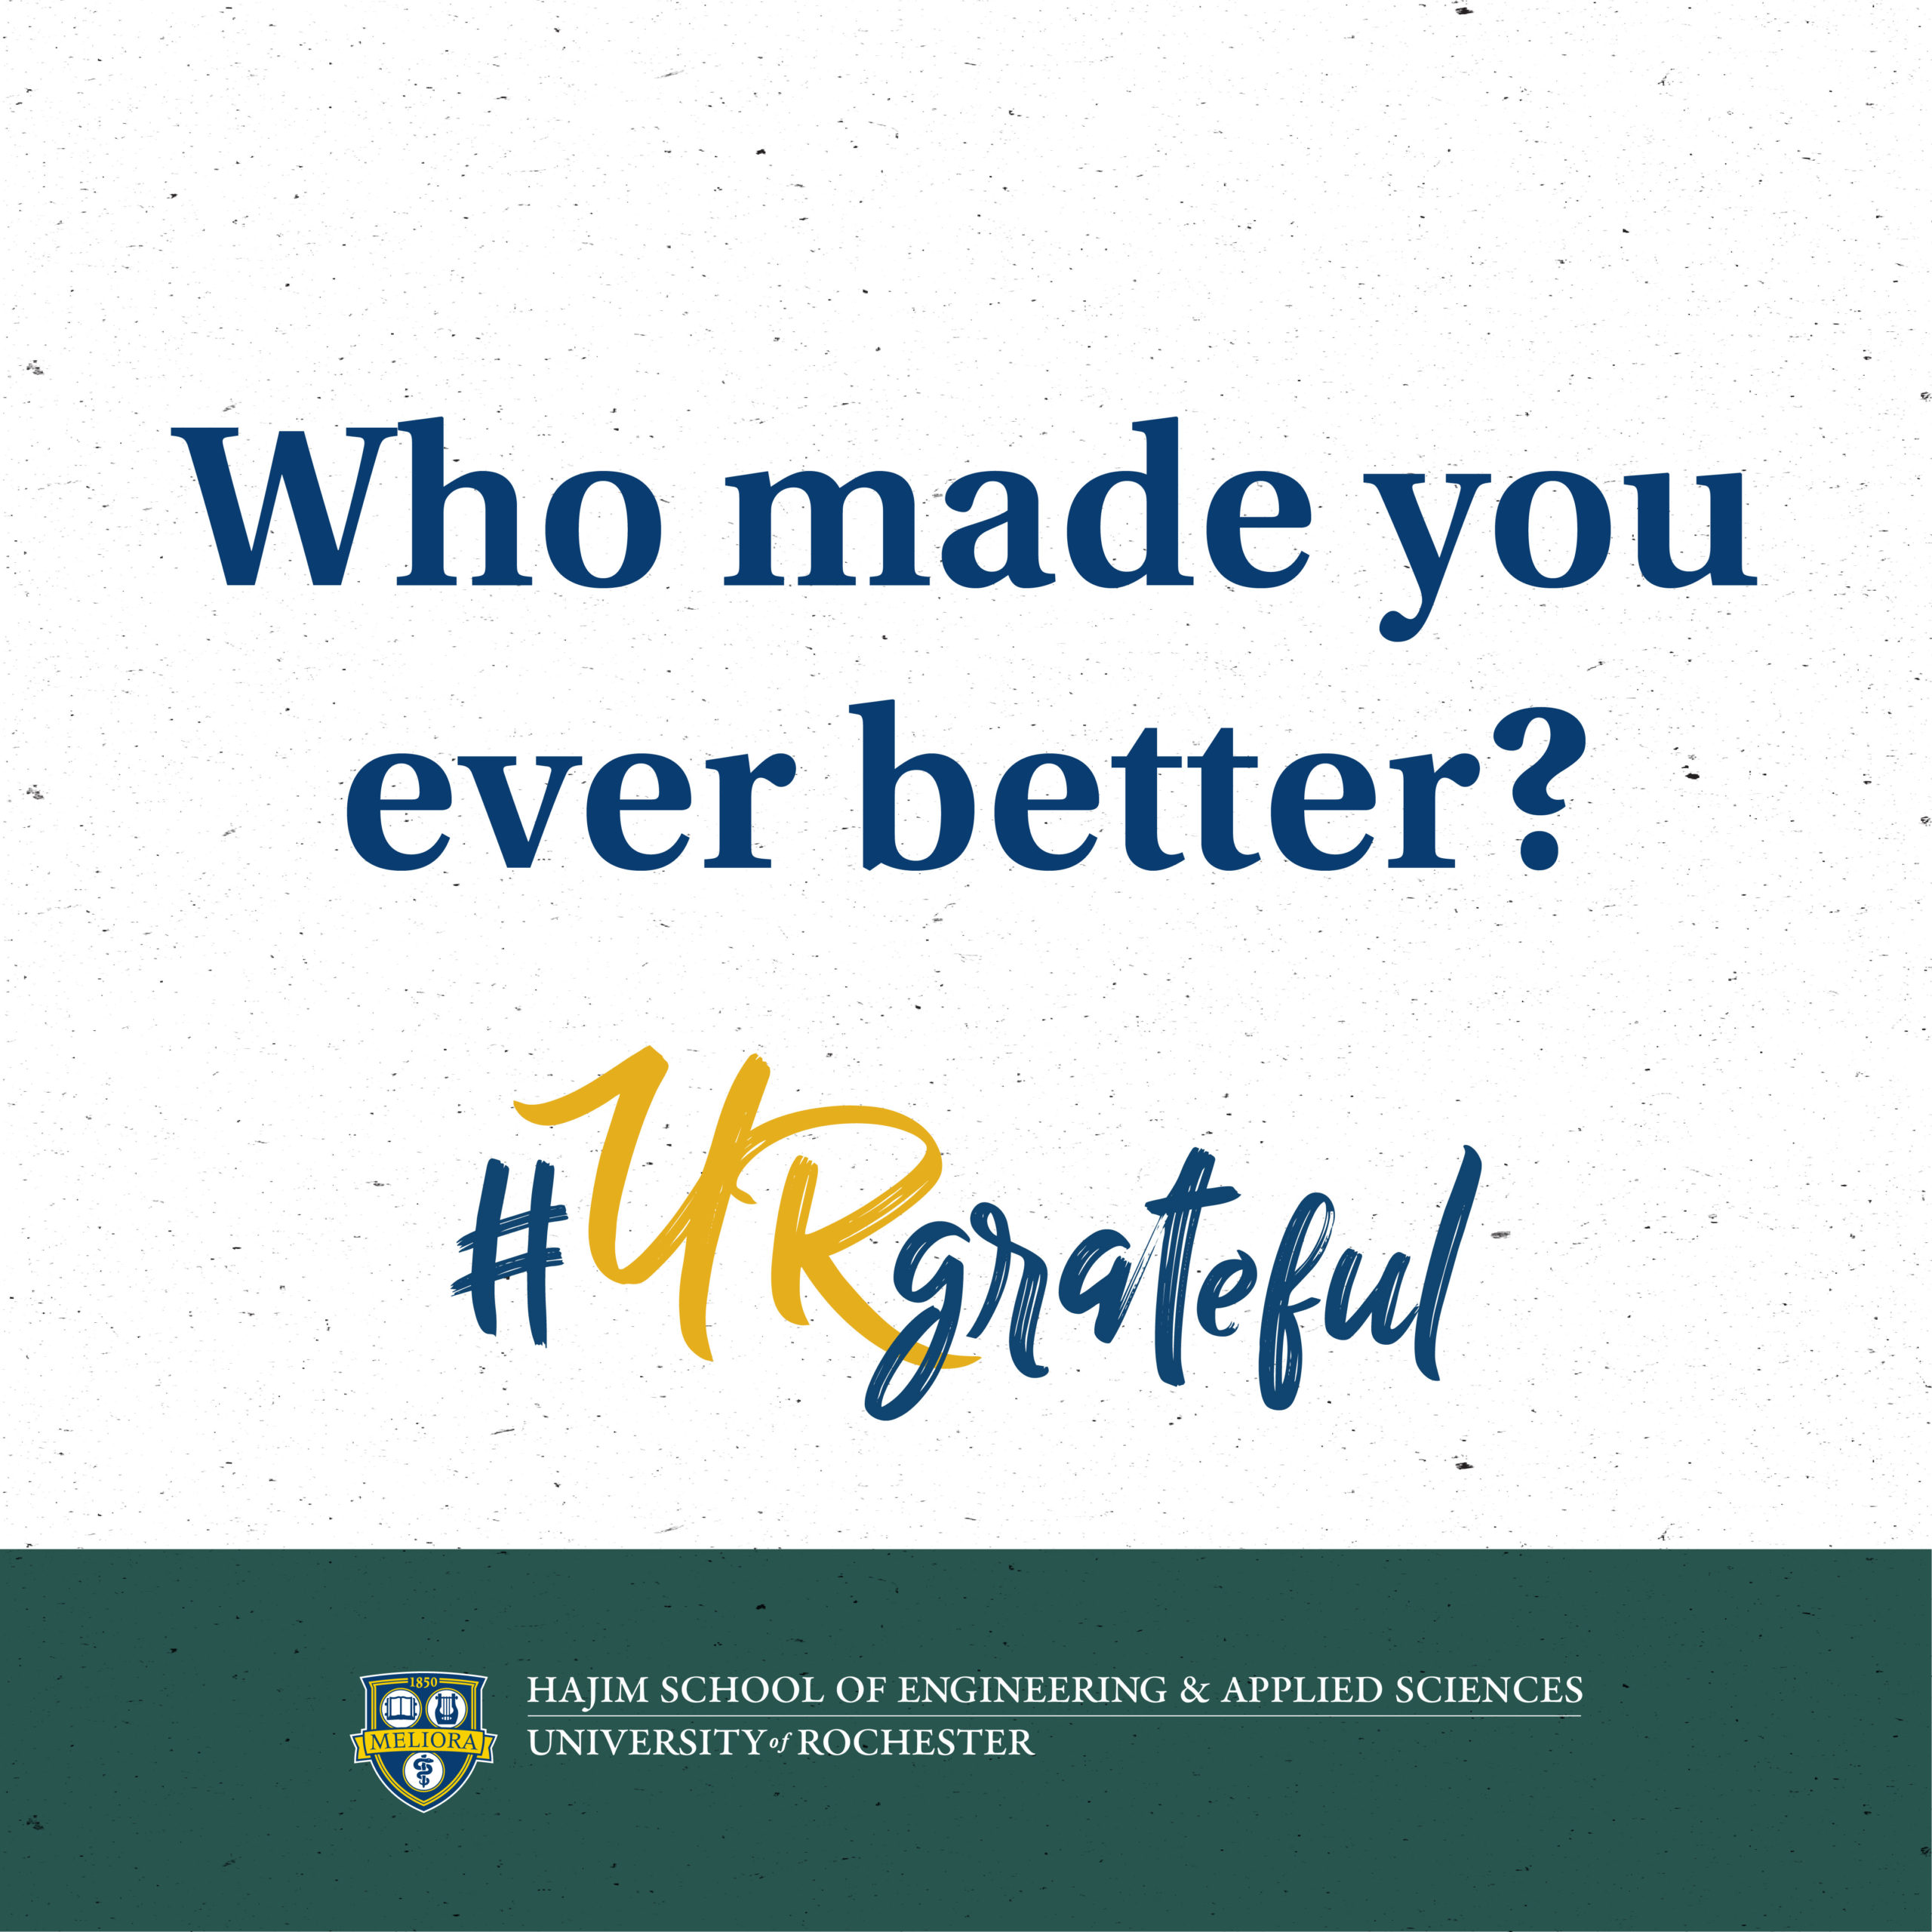 Who made you ever better? #URgrateful - Hajim School